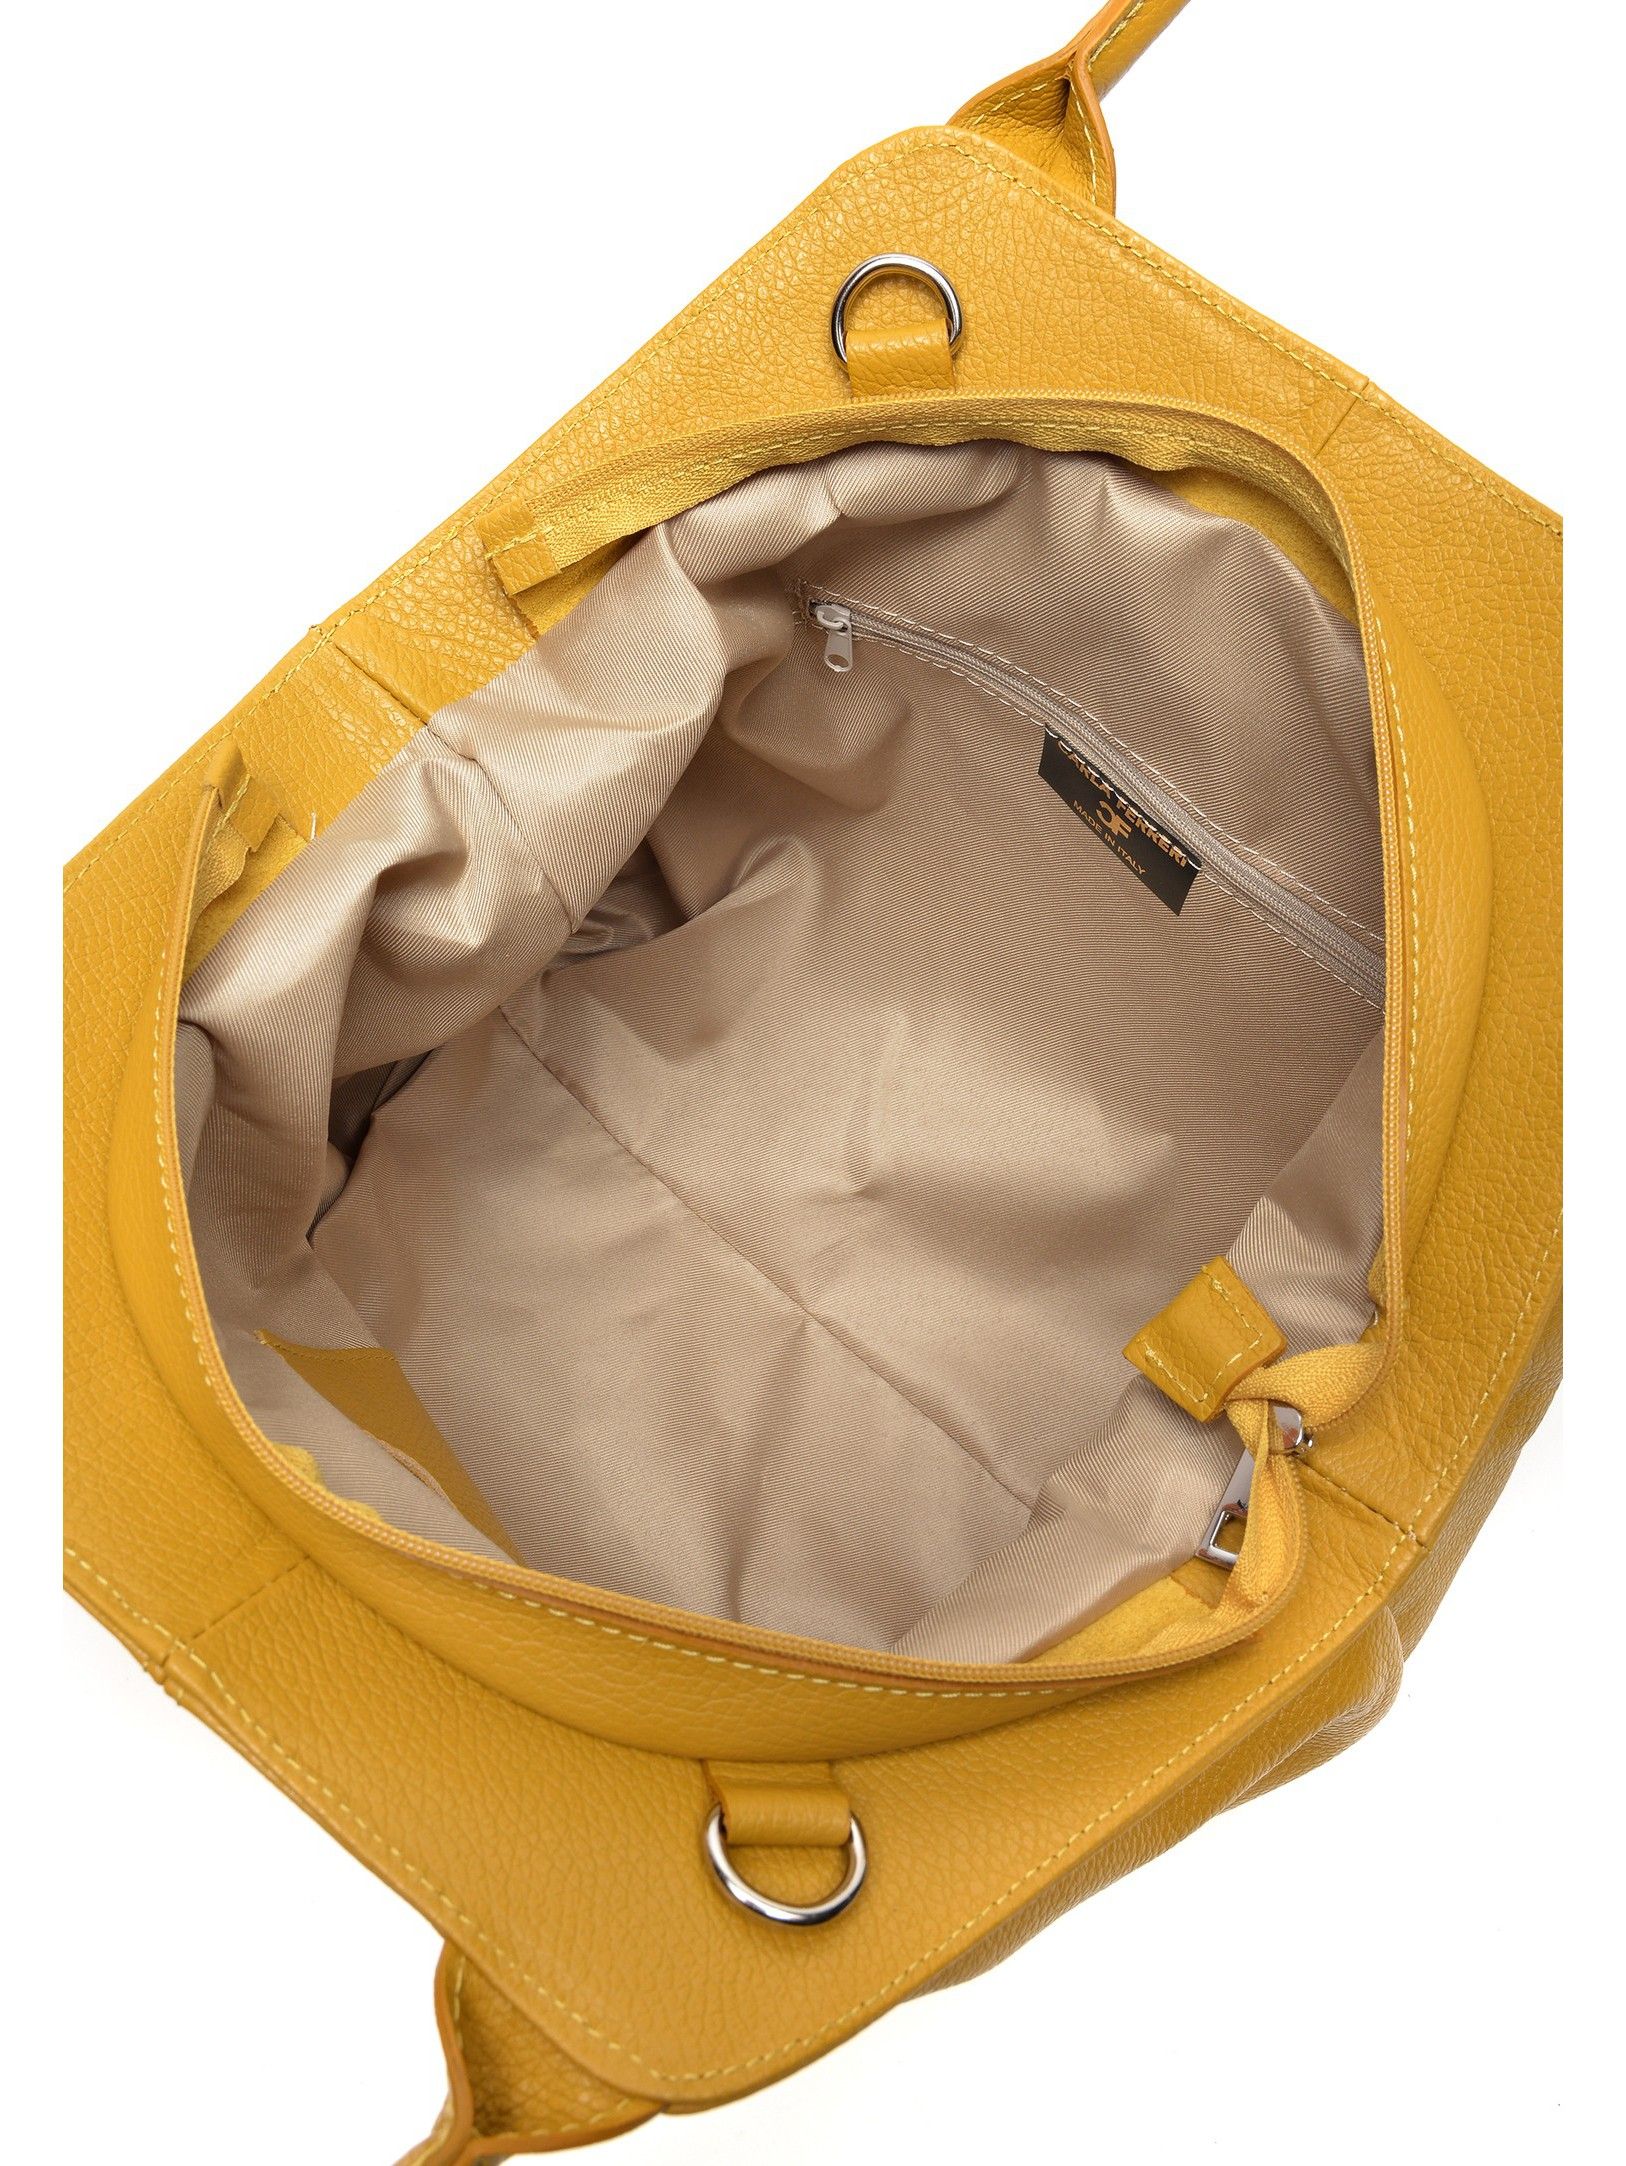 Top Handle Bag
100% cow leather
Top zip closure
Inner zipped pocket
Ribbon detail
Dimensions(L):30x38x13 cm
Handle:40 cm
Shoulder strap:120 cm